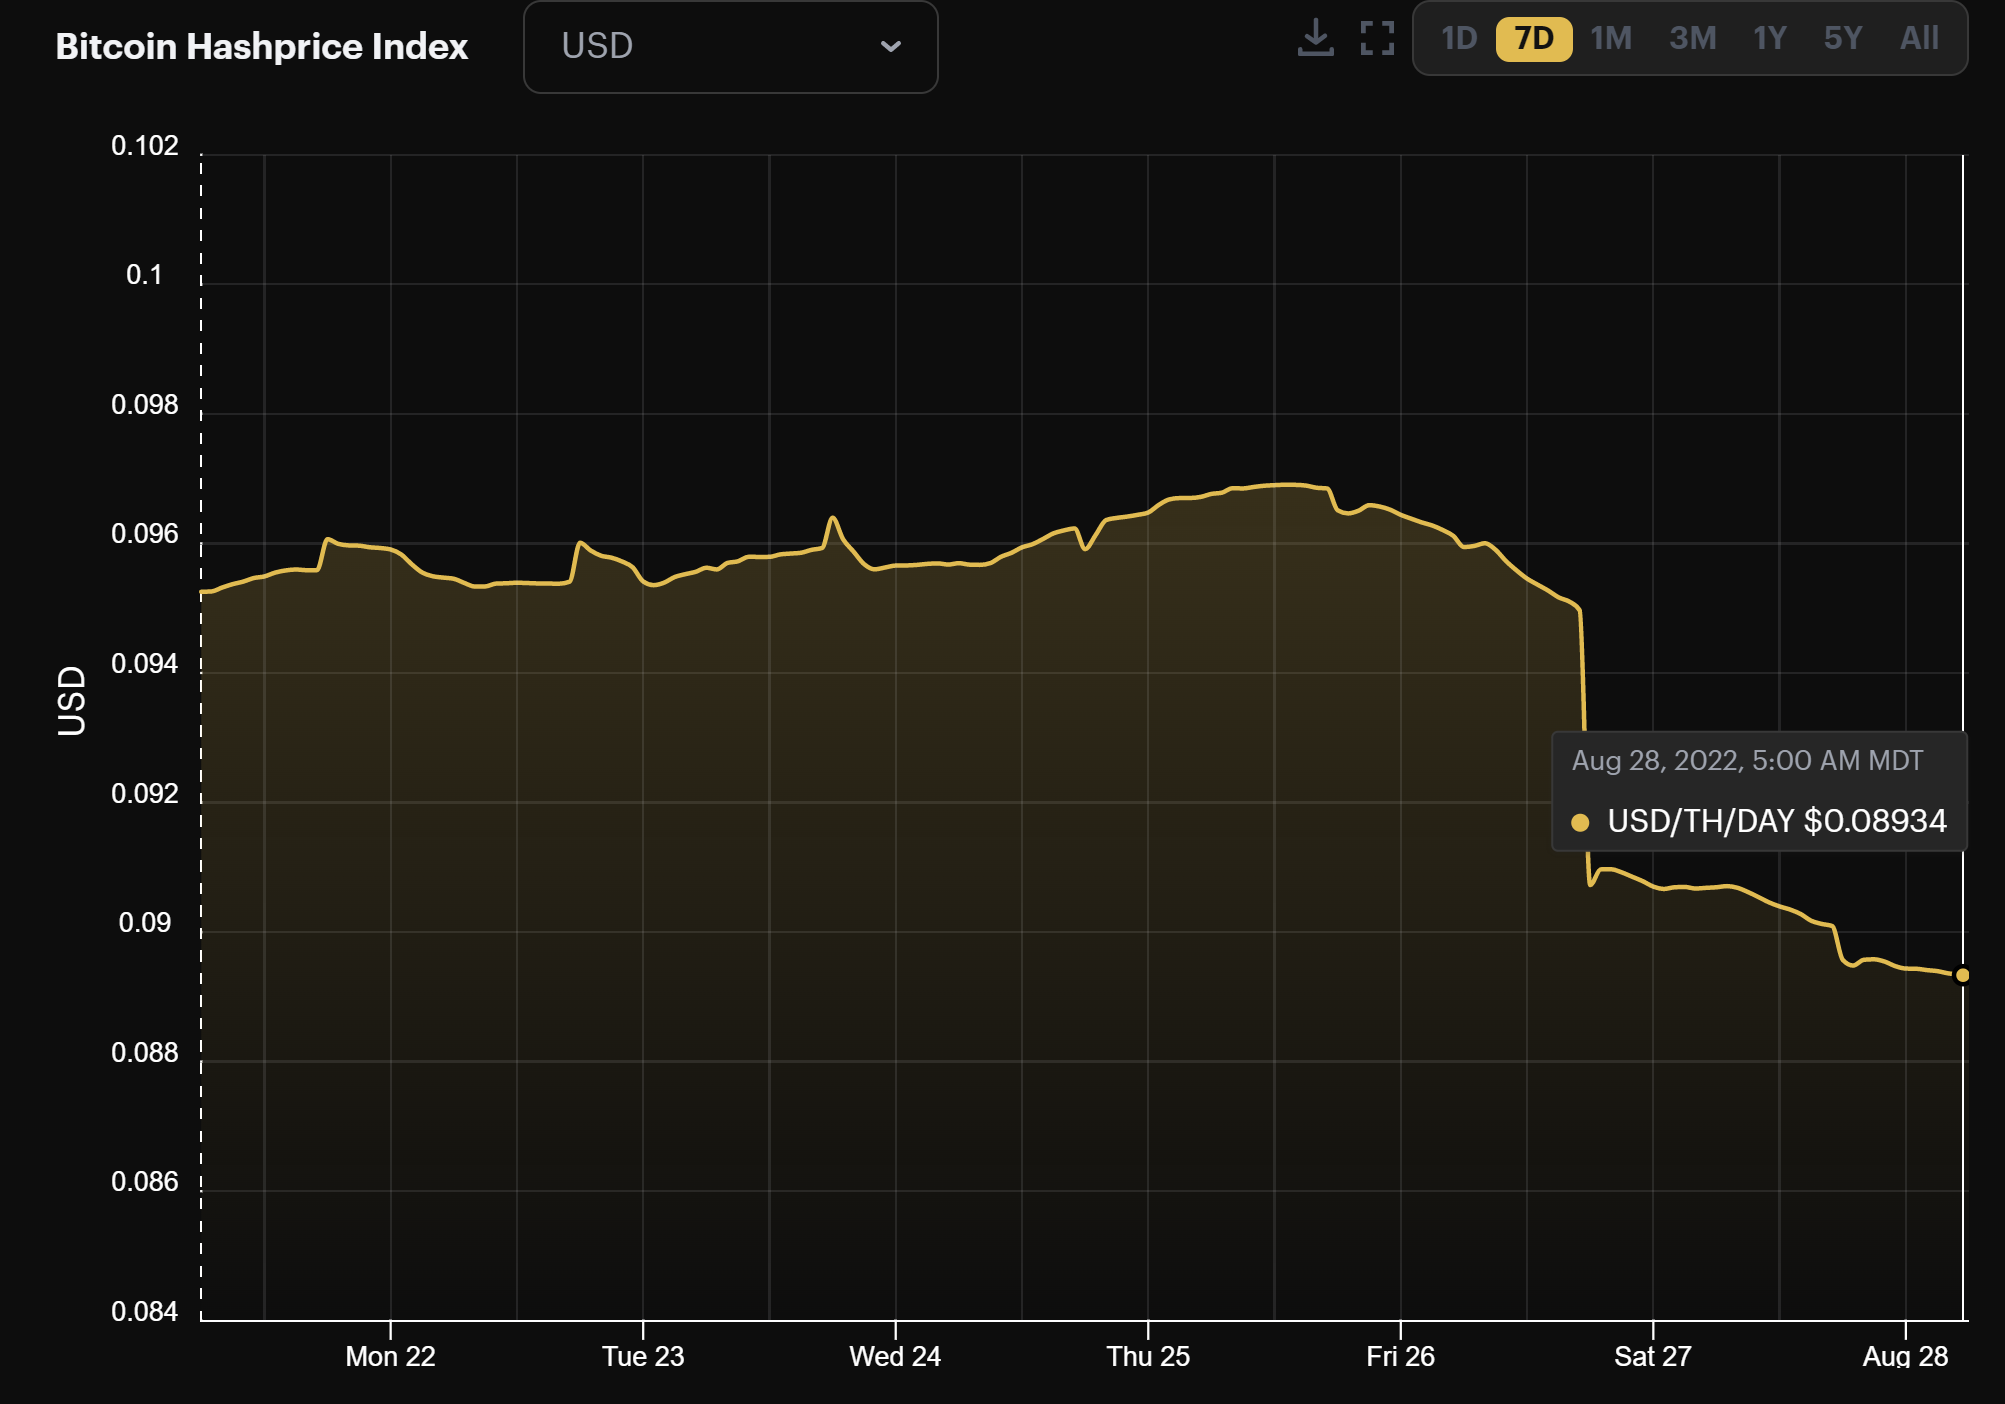 Bitcoin mining USD hashprice (August 22 - August 28, 2022)